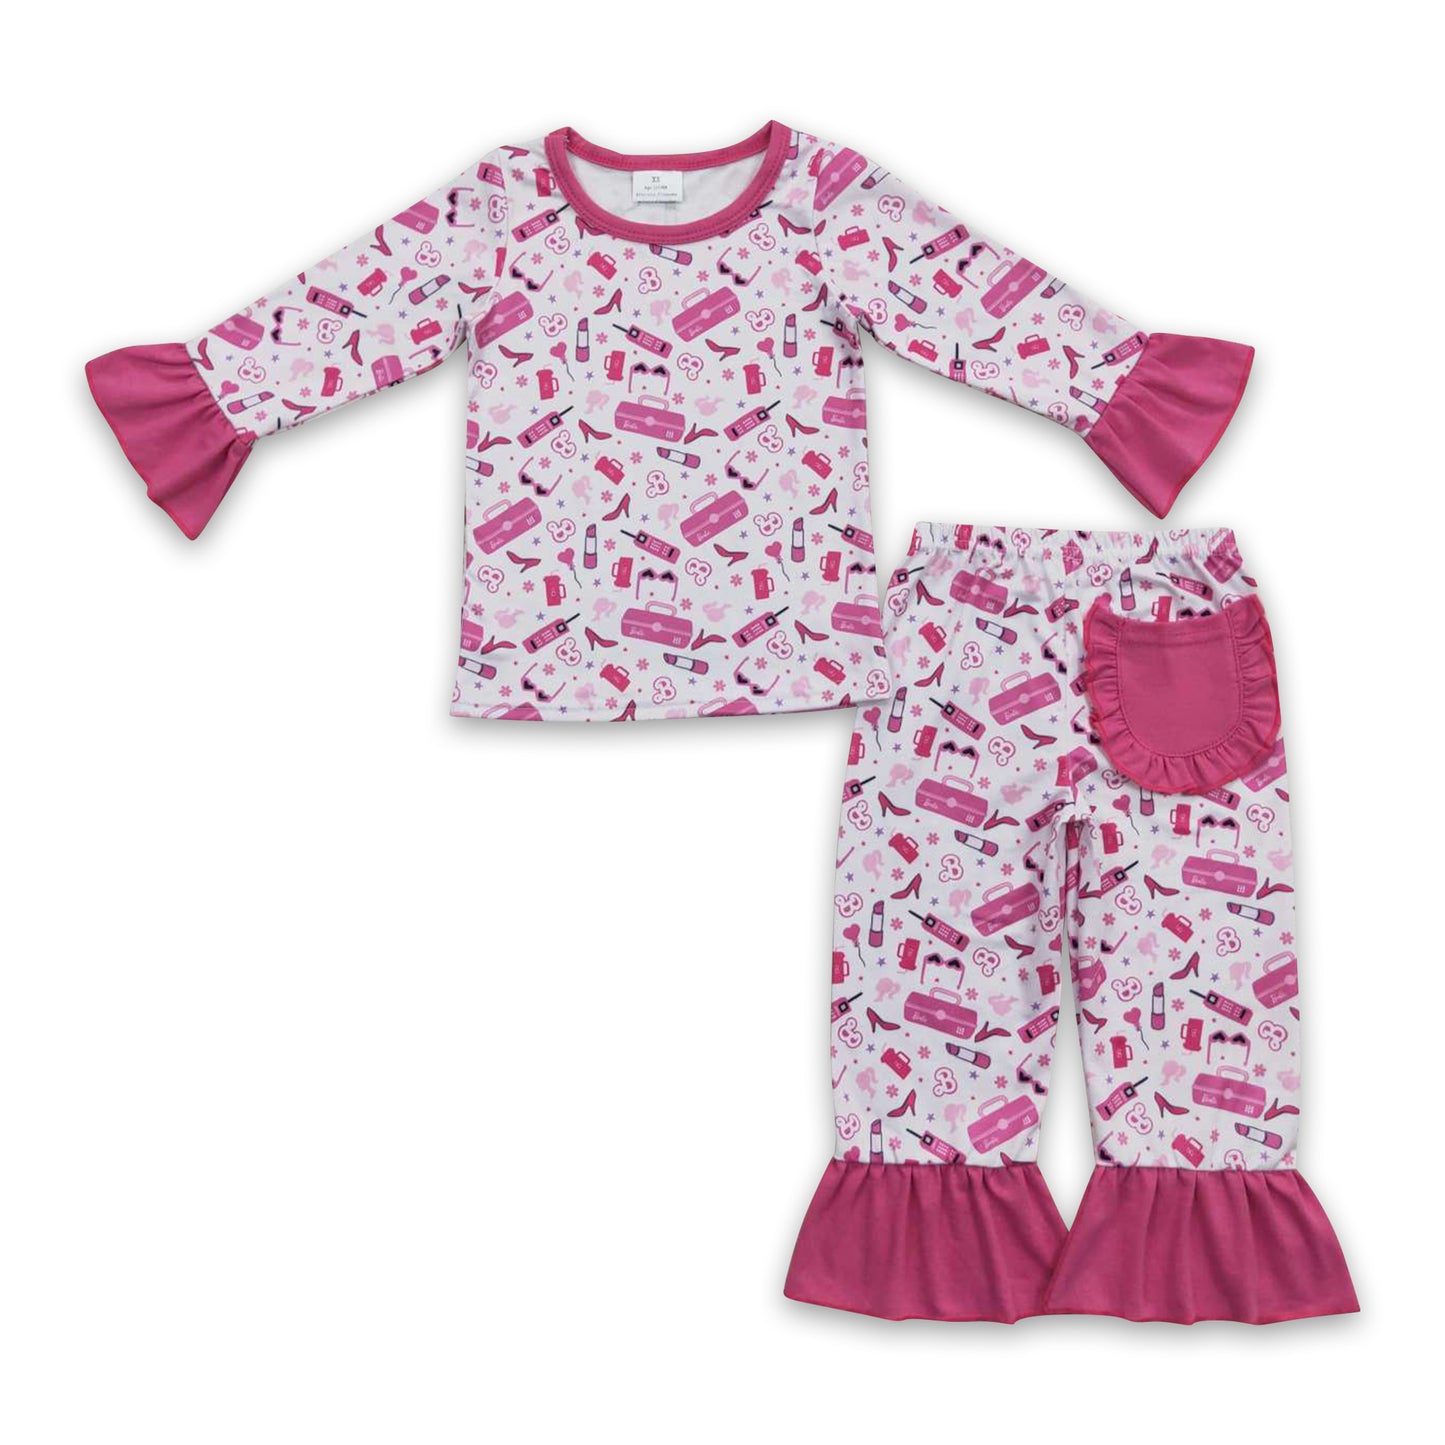 Hot pink pocket party girls pajamas